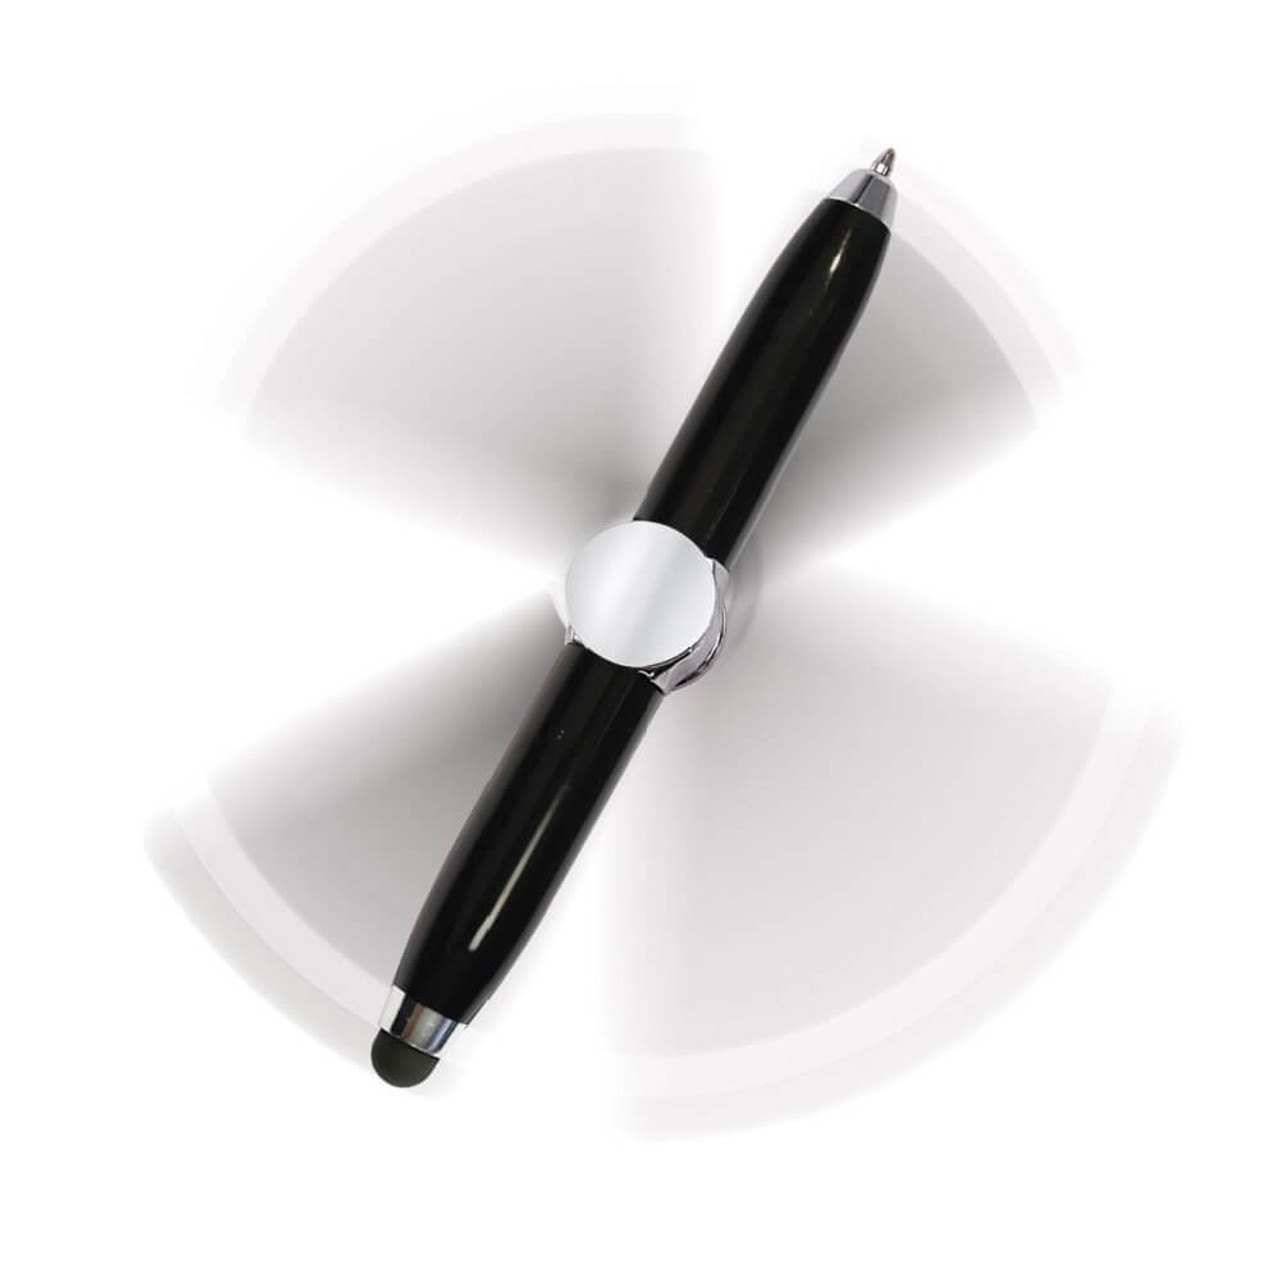 The Fidget Pen with Stylus